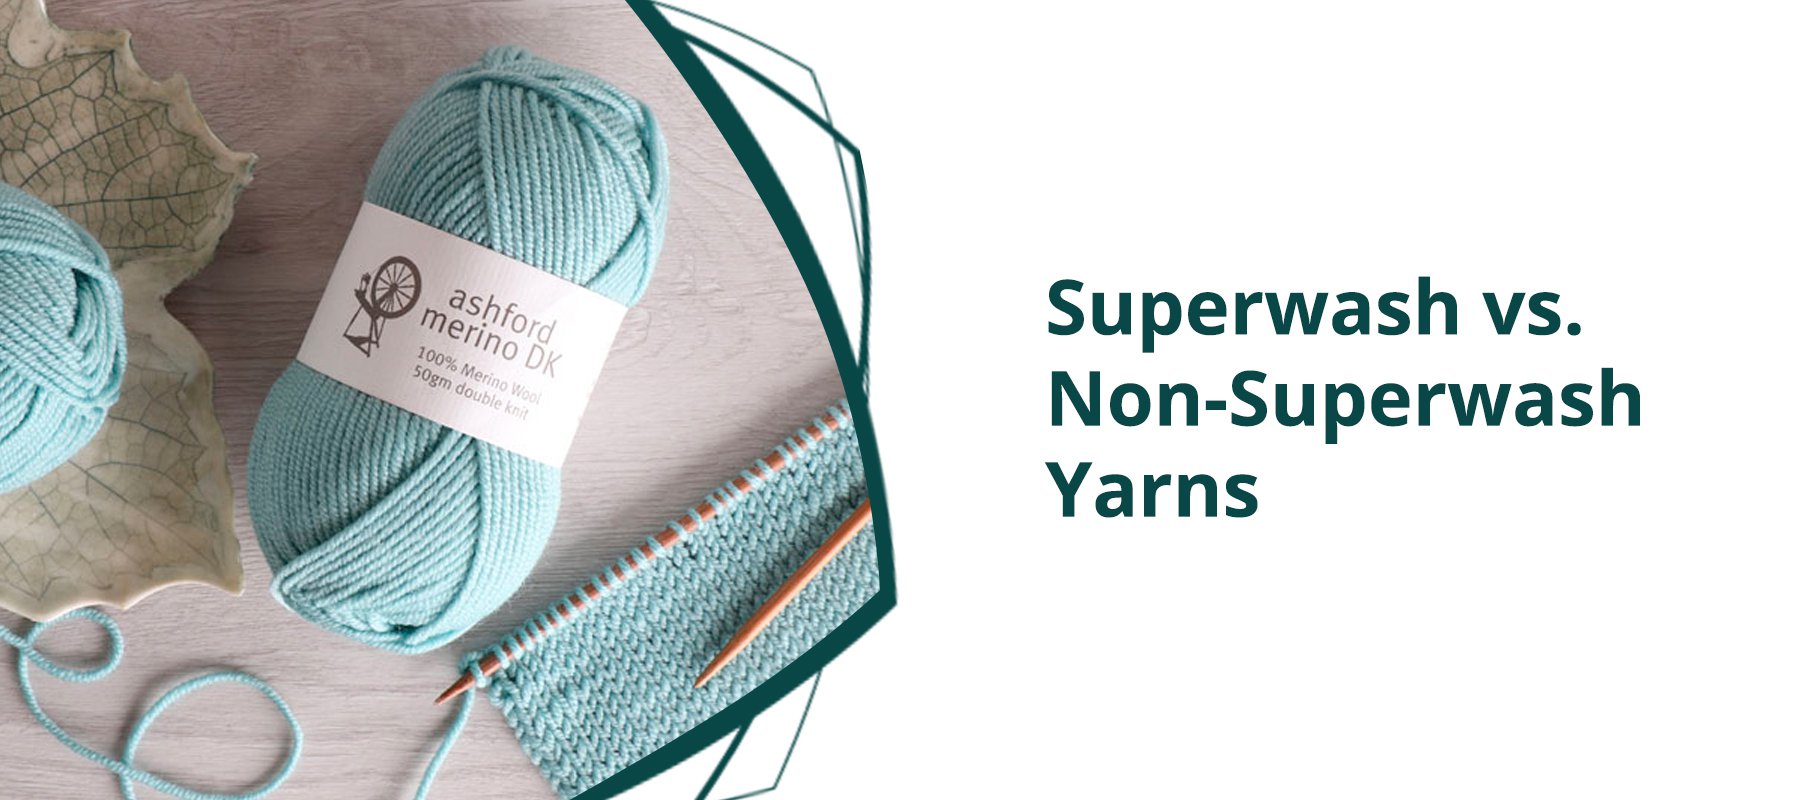 Superwash versus Non-Superwash Yarns